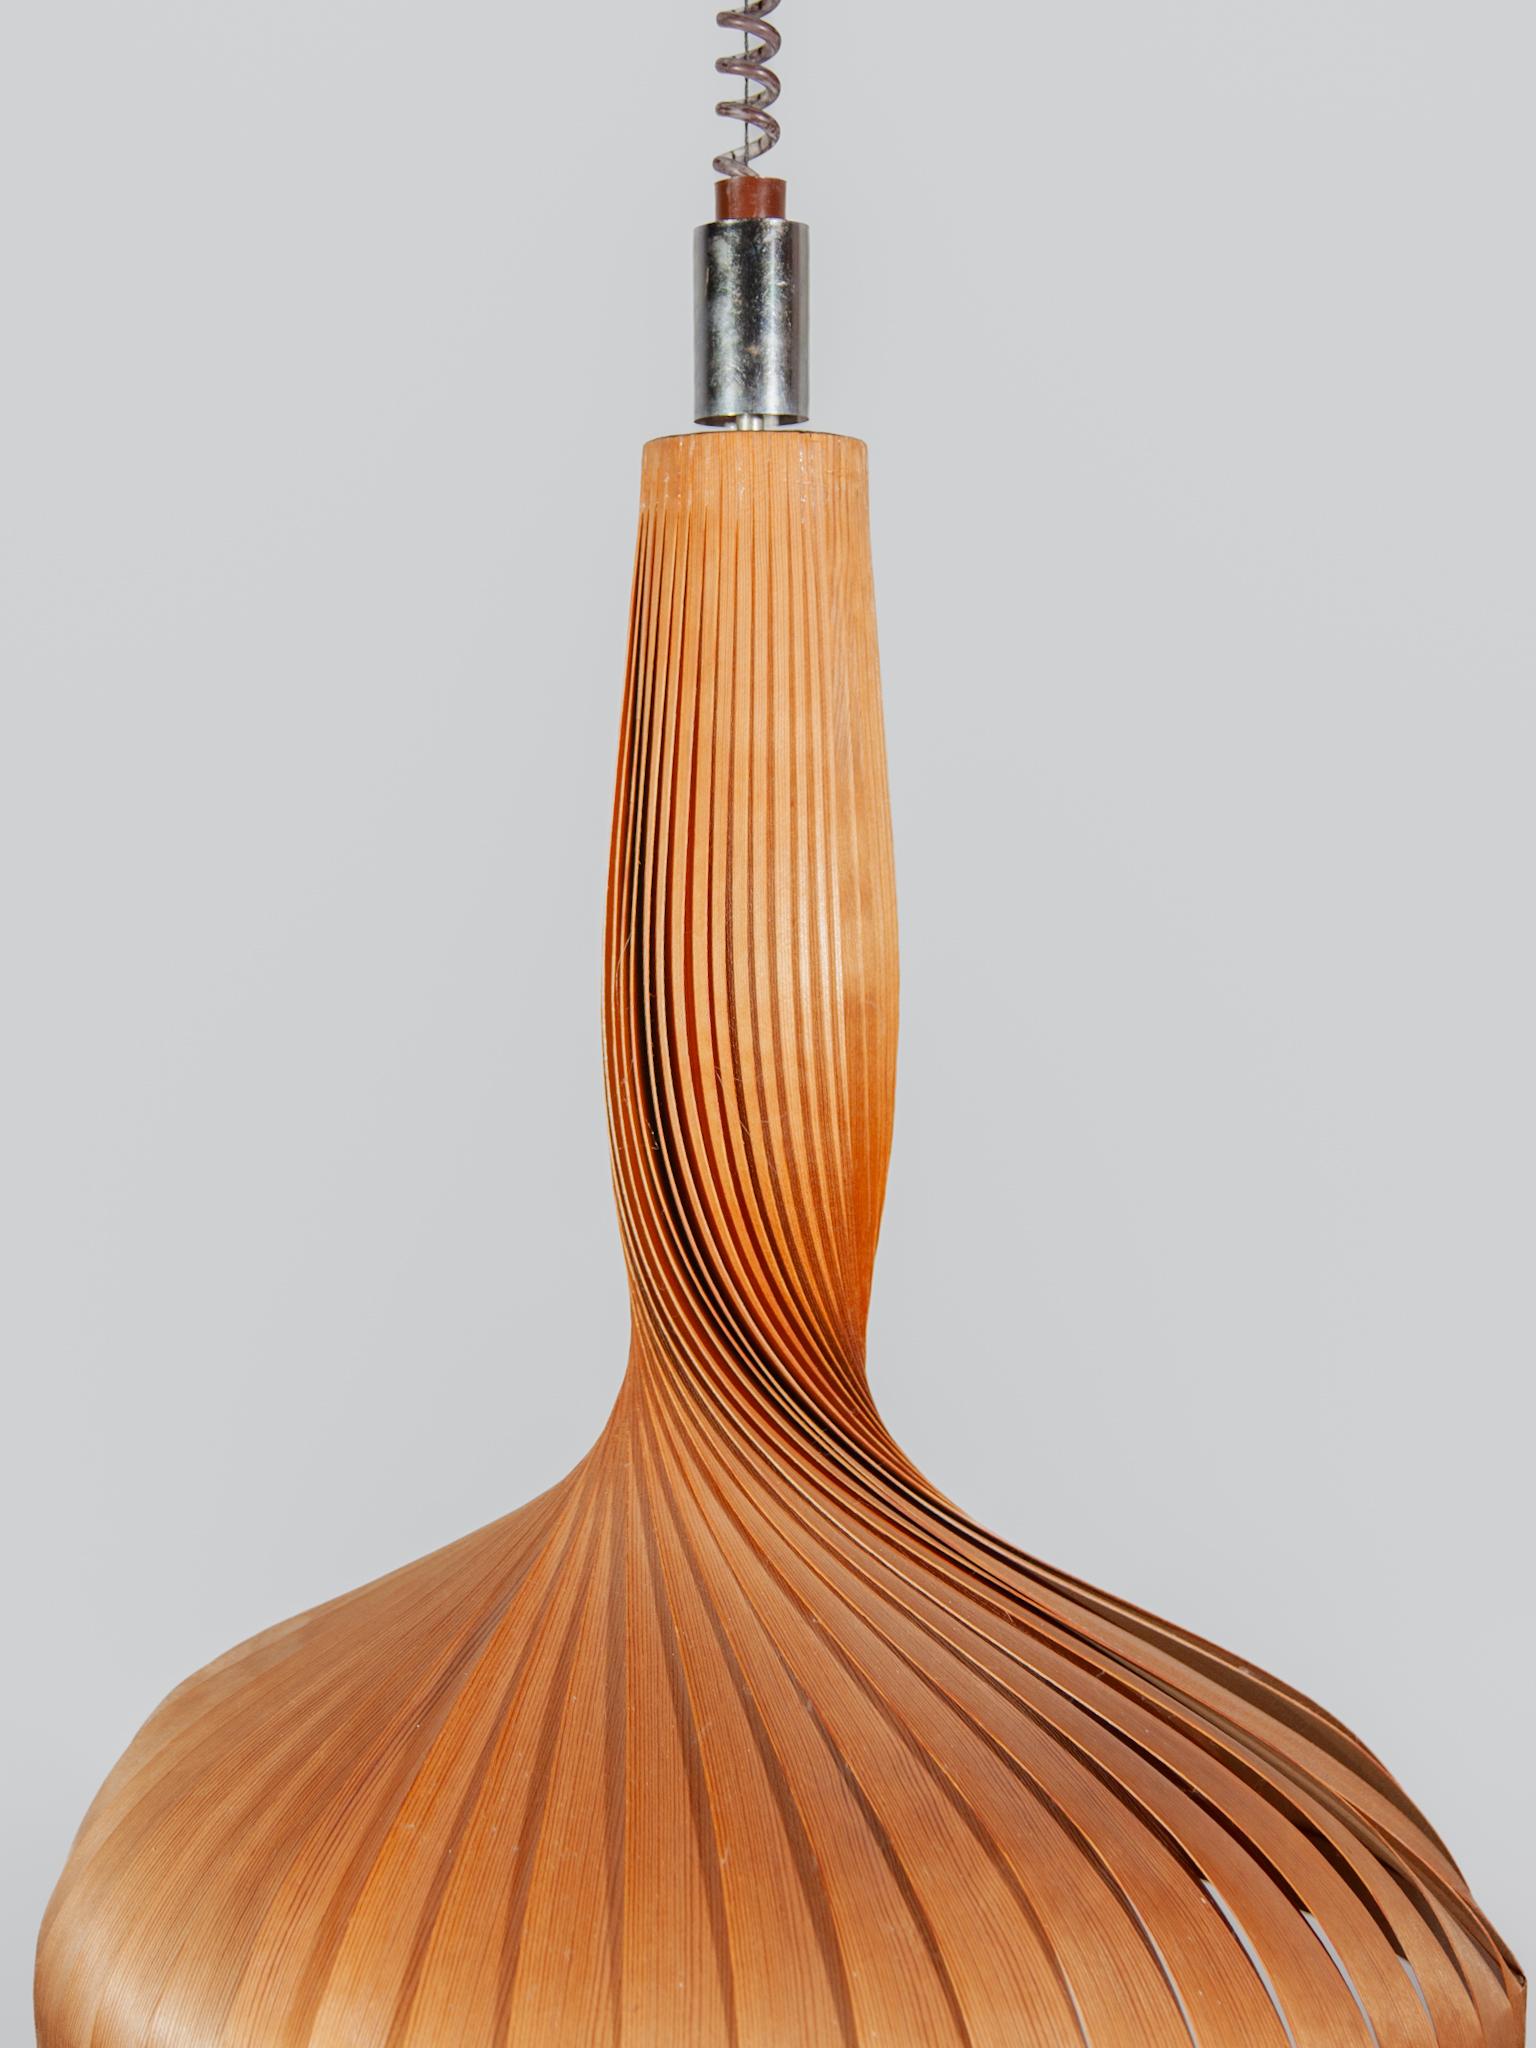 Plywood Natural Wooden Lamp by Hans-Agne Jakobsson for AB Ellysett Markaryd, Sweden. For Sale